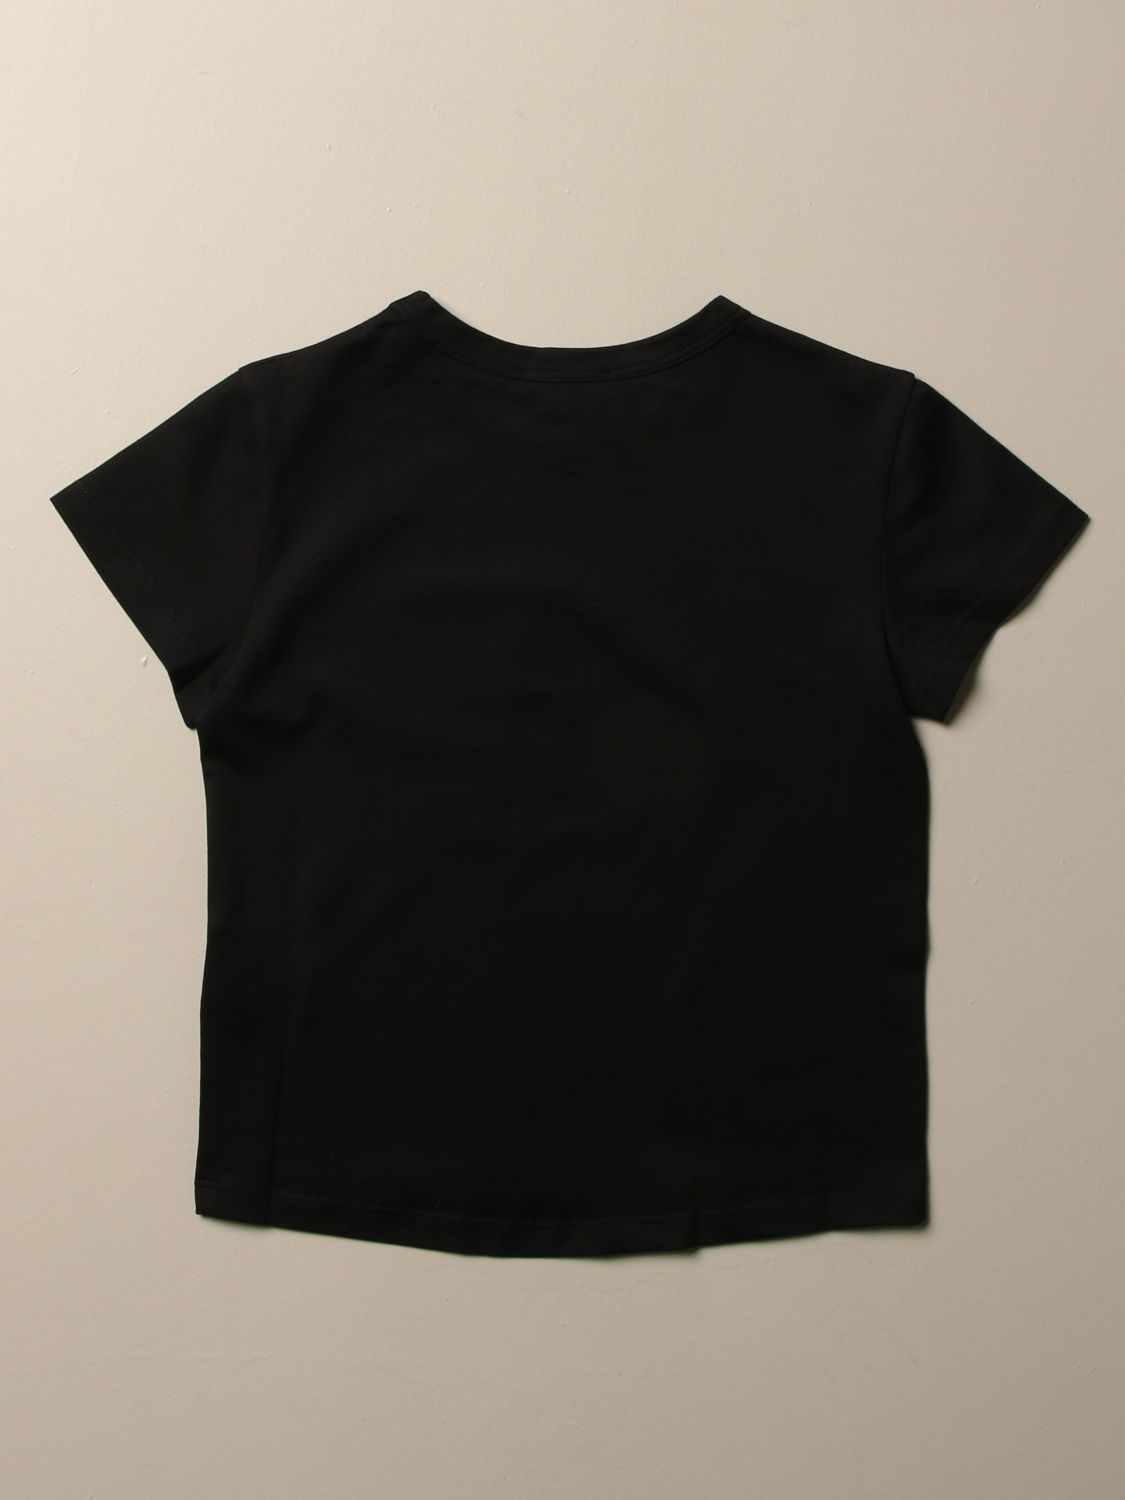 Givenchy Outlet: T-shirt kids | T-Shirt Givenchy Kids Black | T-Shirt ...